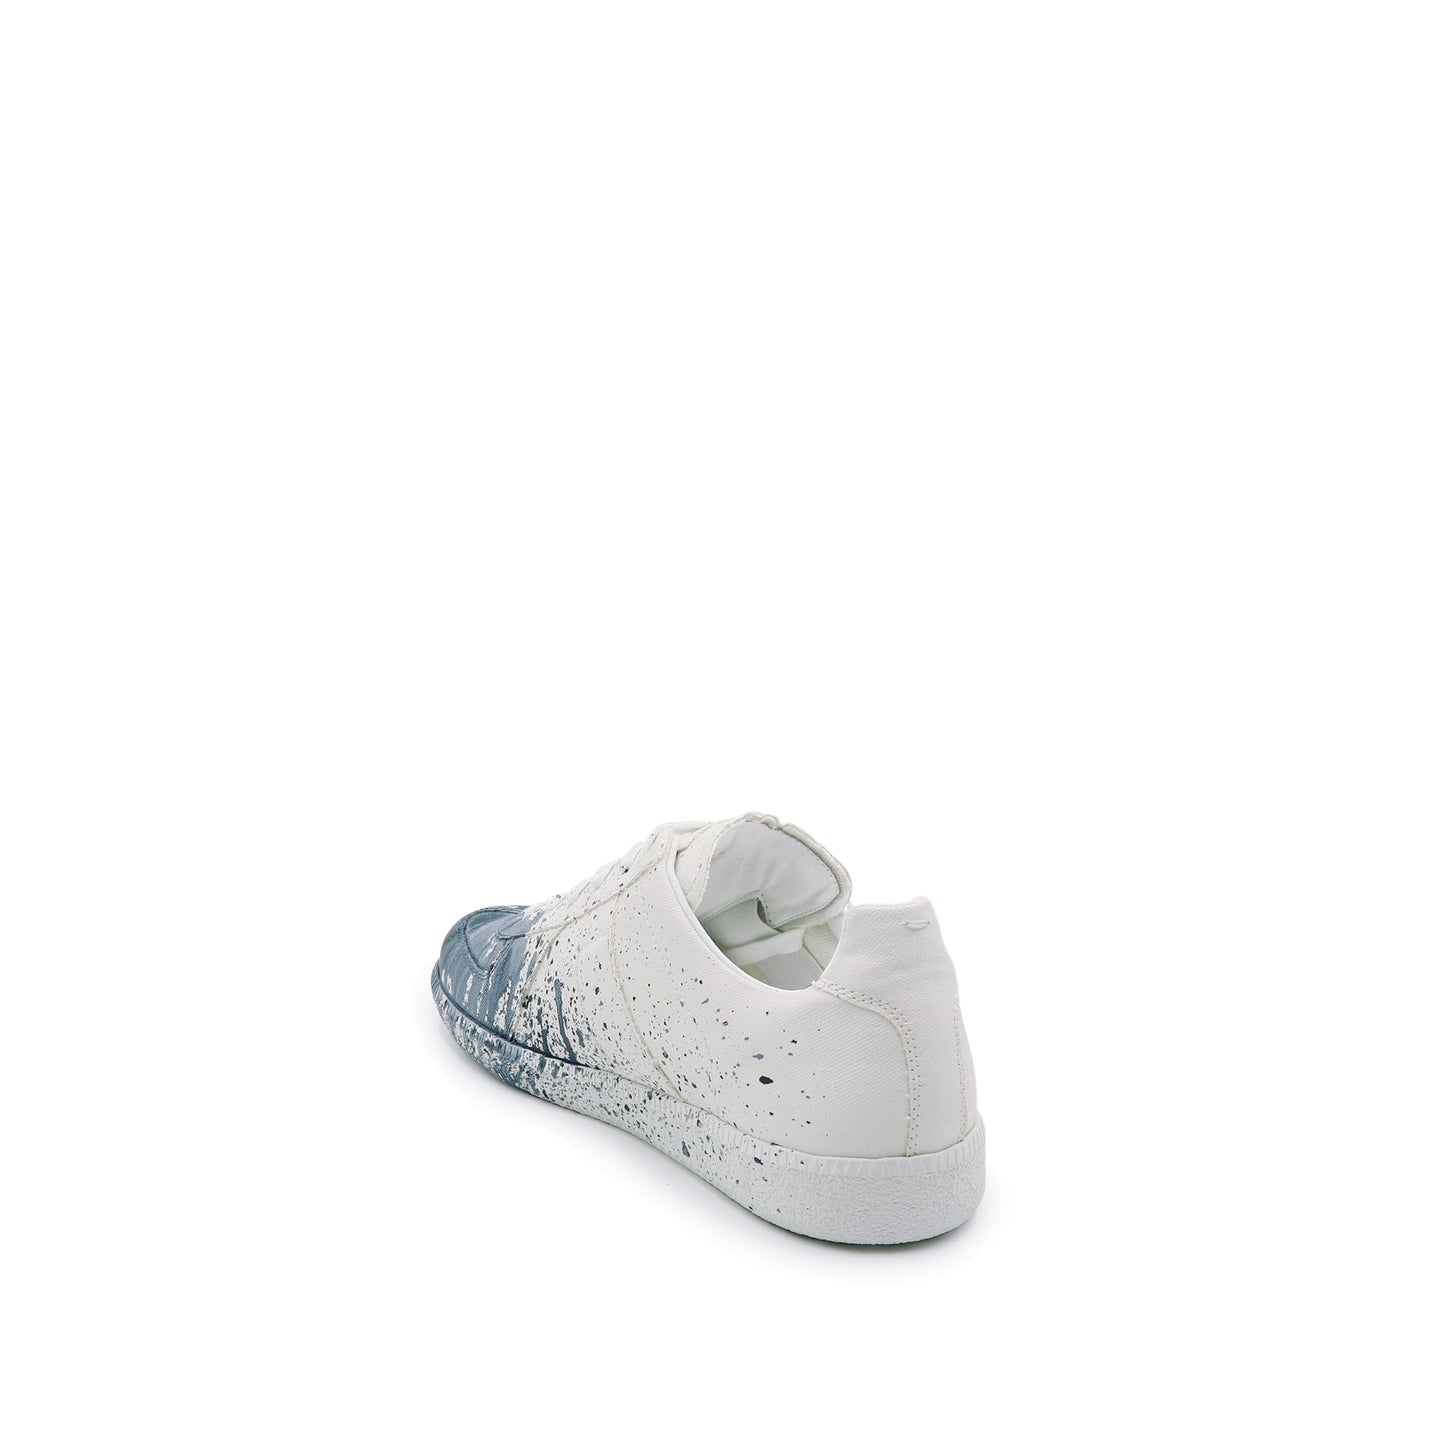 Replica Paint Drop Sneaker in White Mix